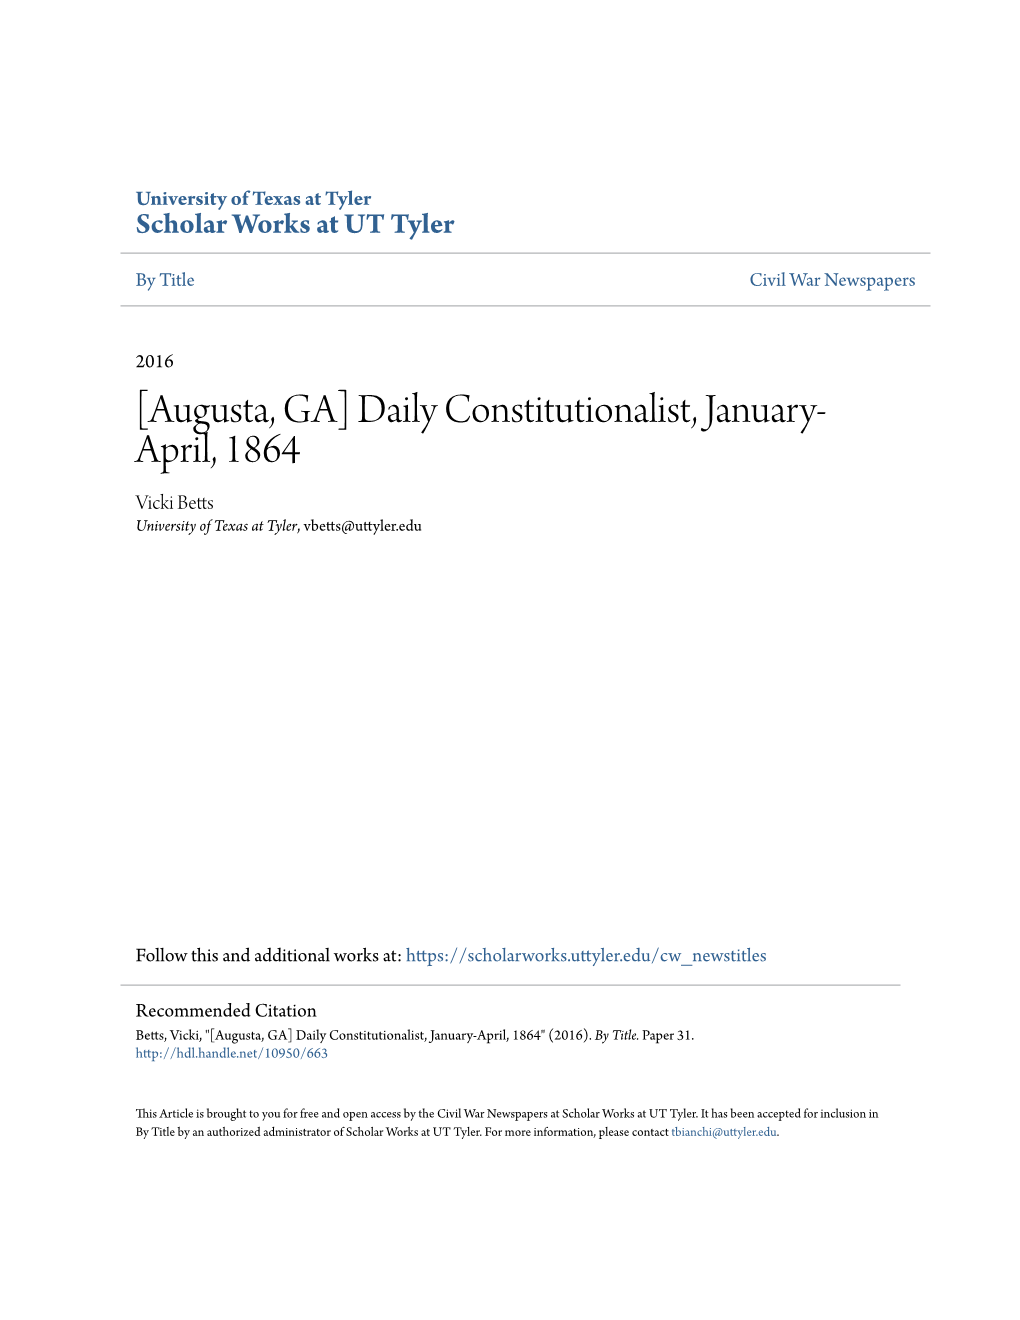 Augusta, GA] Daily Constitutionalist, January- April, 1864 Vicki Betts University of Texas at Tyler, Vbetts@Uttyler.Edu